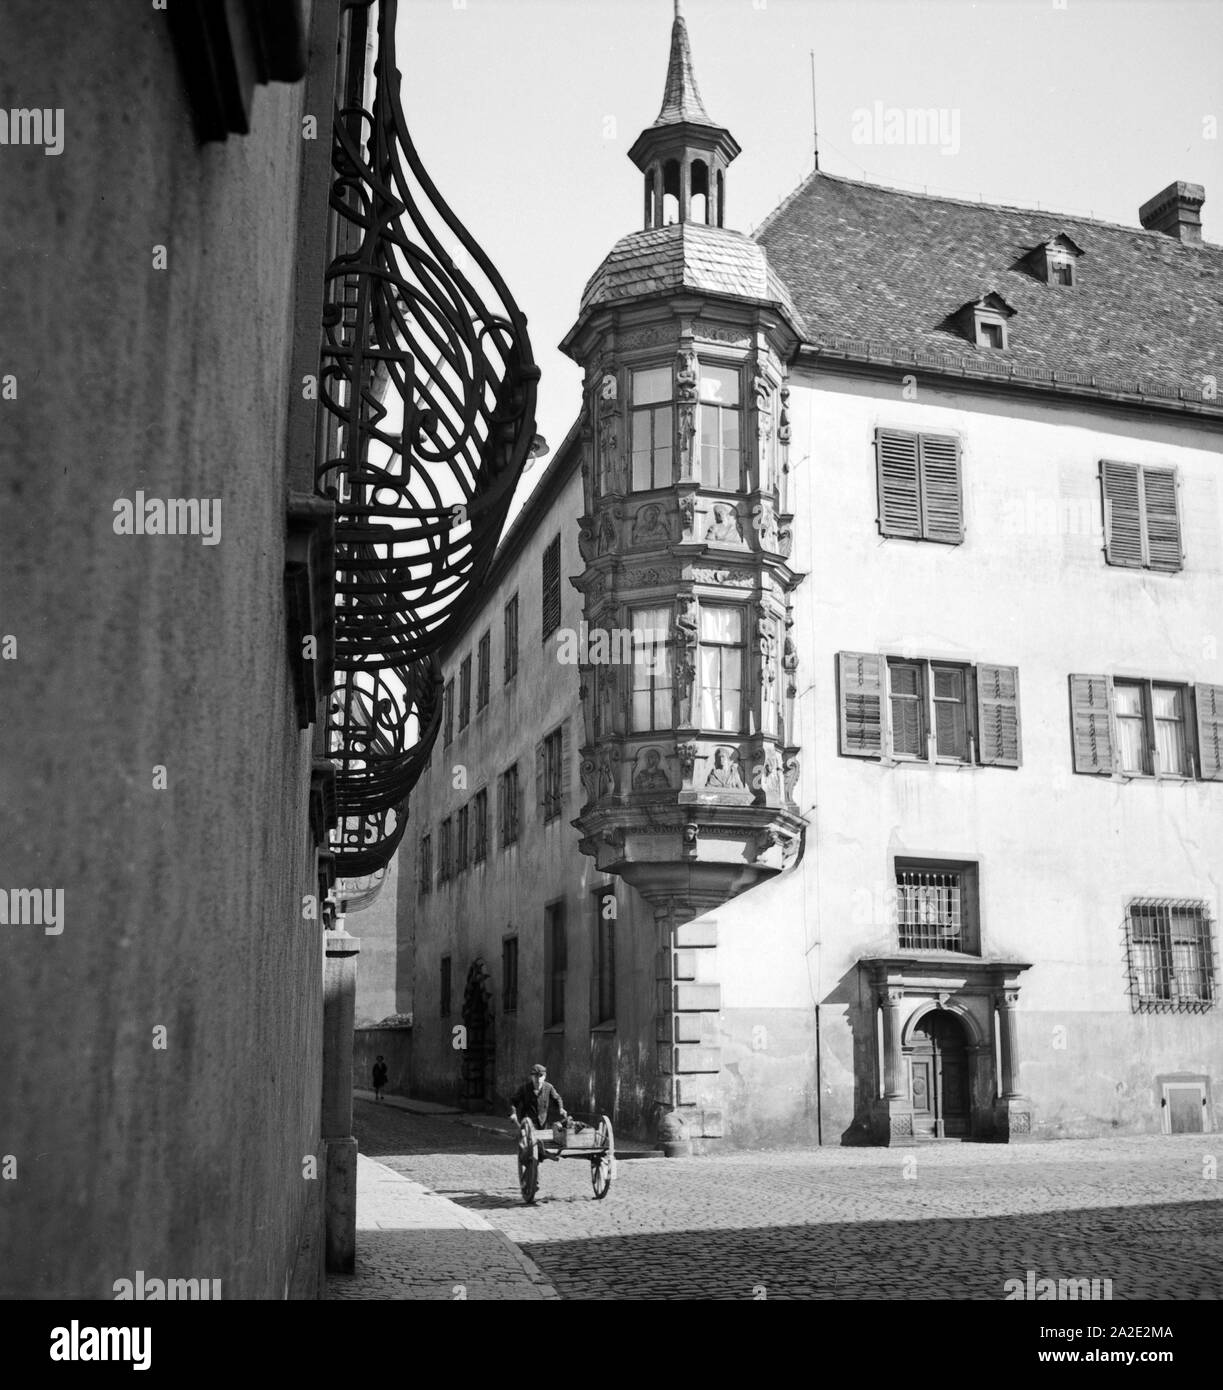 Un einem Gebäude Eckturm historischen en Würzburg, Deutschland 1930er Jahre. Jutty esquina en un edificio histórico en Würzburg, Alemania 1930. Foto de stock